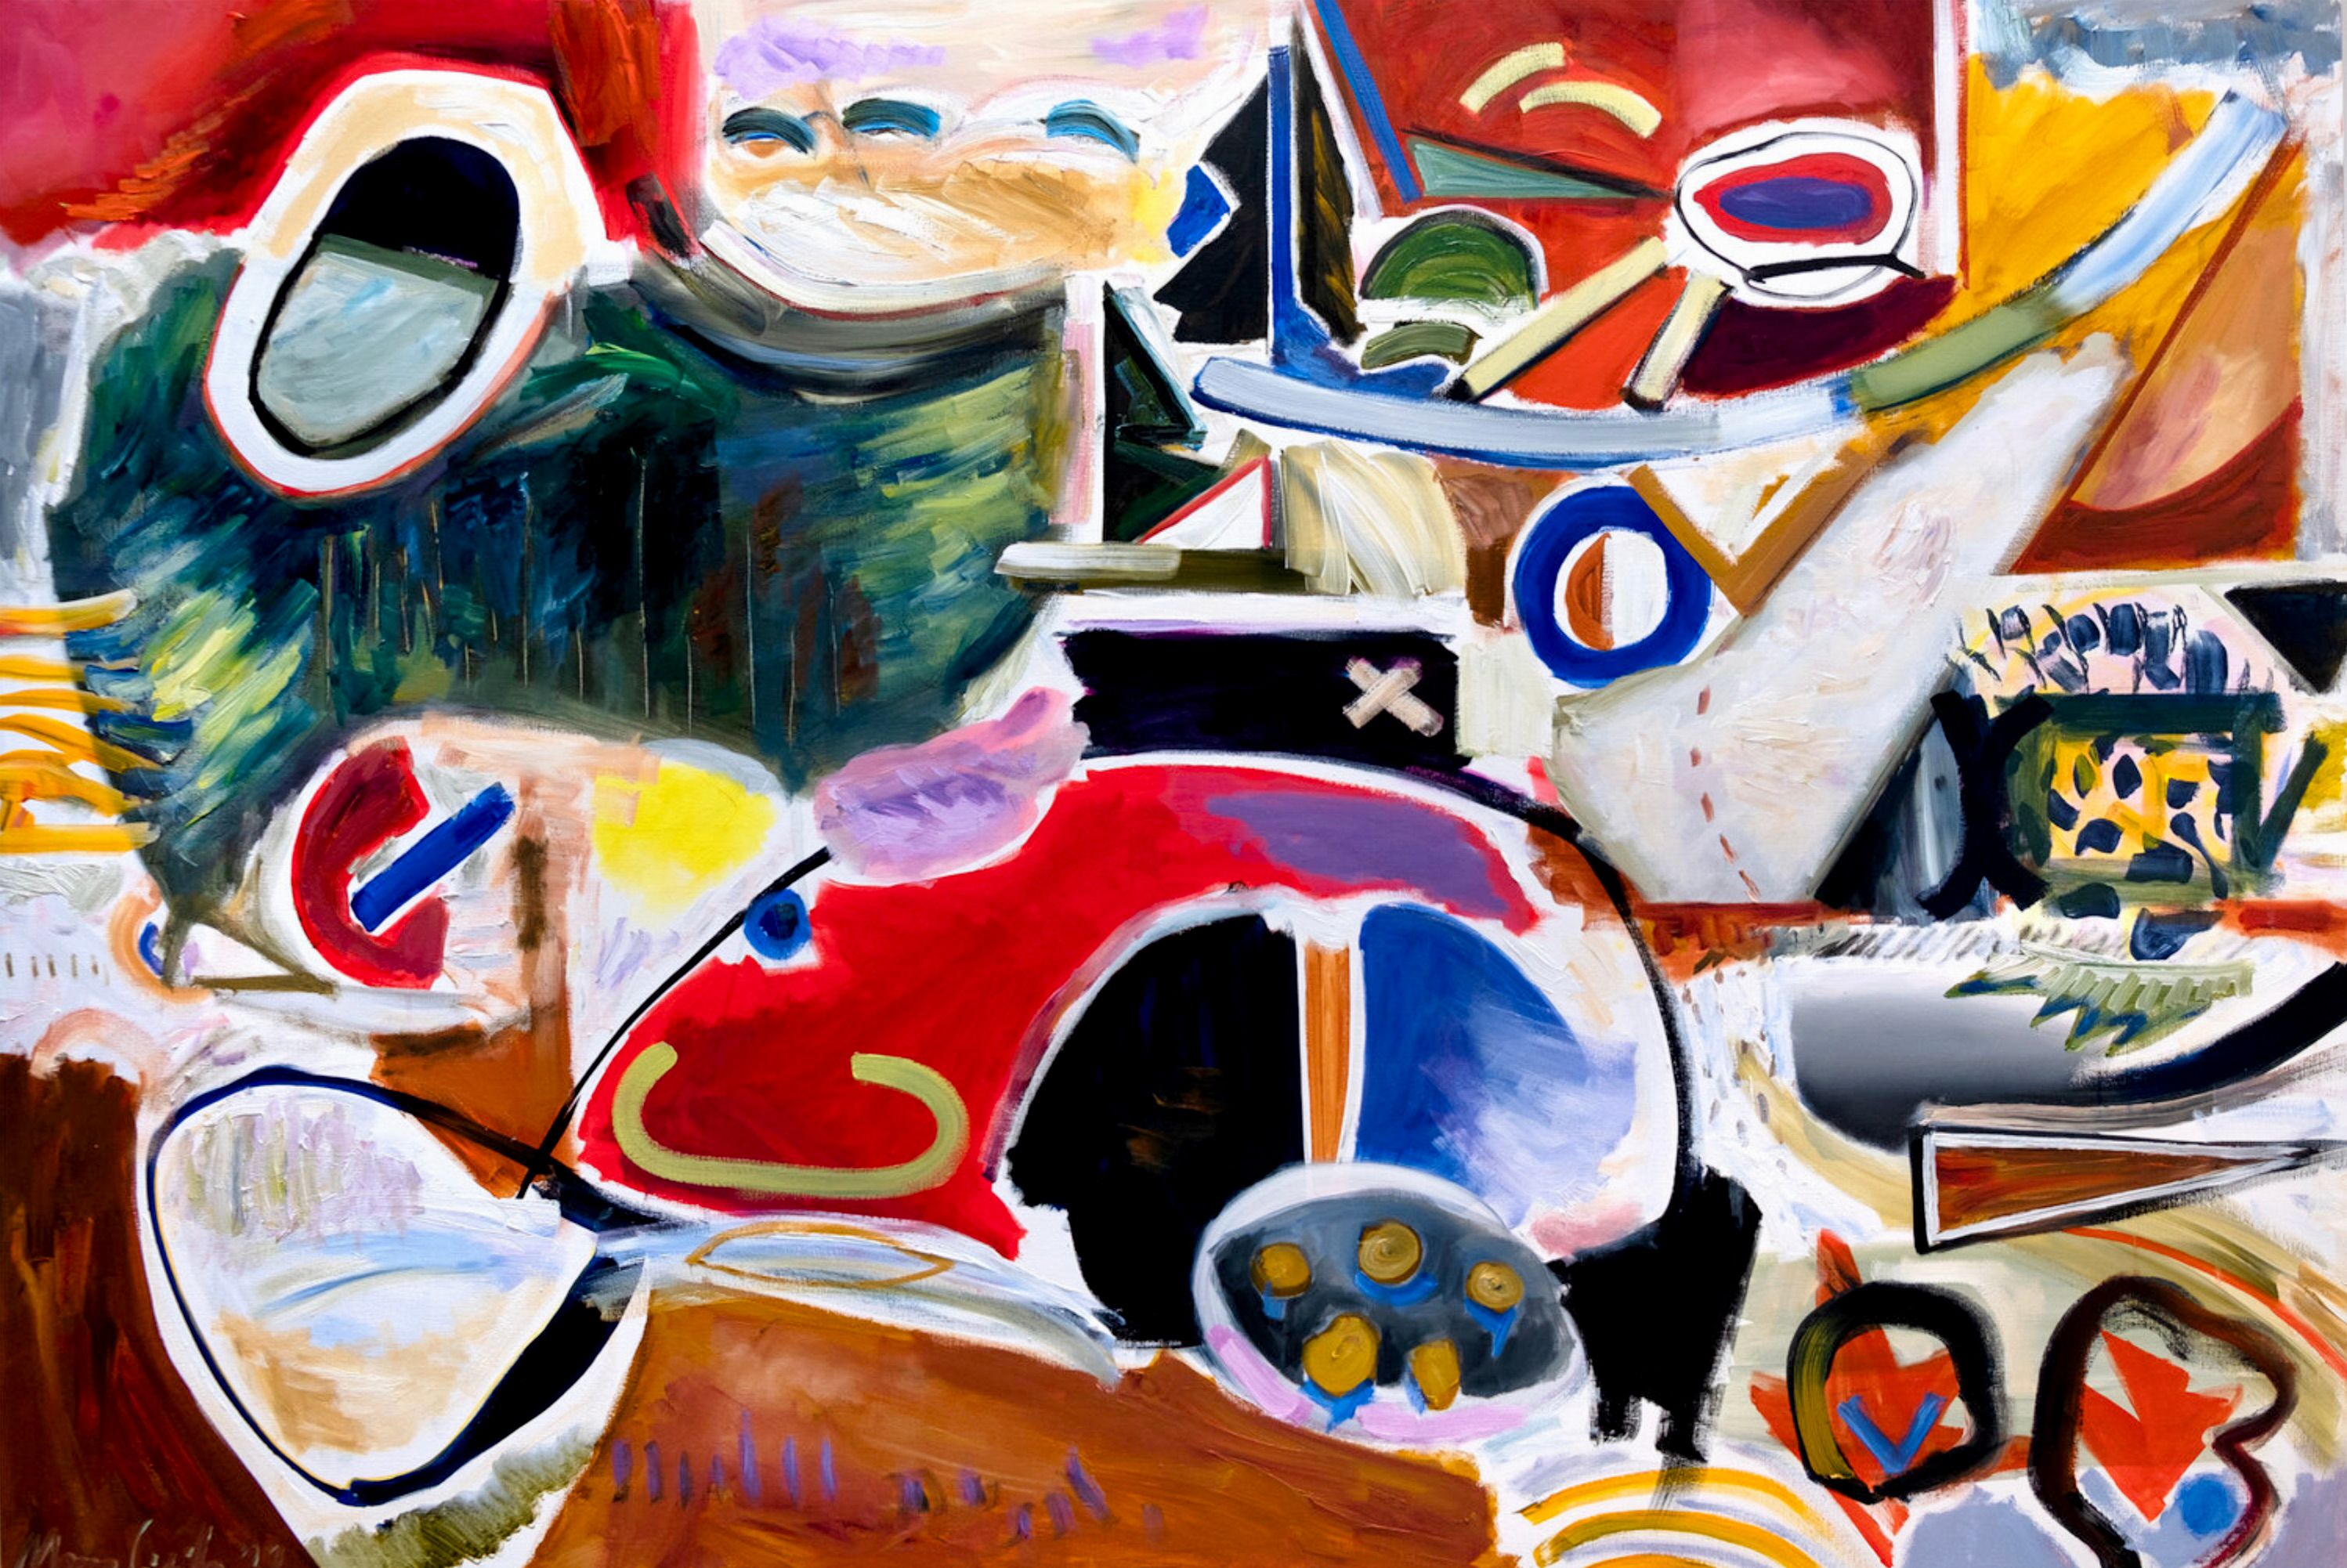 MECESLA Maciej Cieśla, "Abstract Inspired by nature", Peinture abstraite colorée sur toile